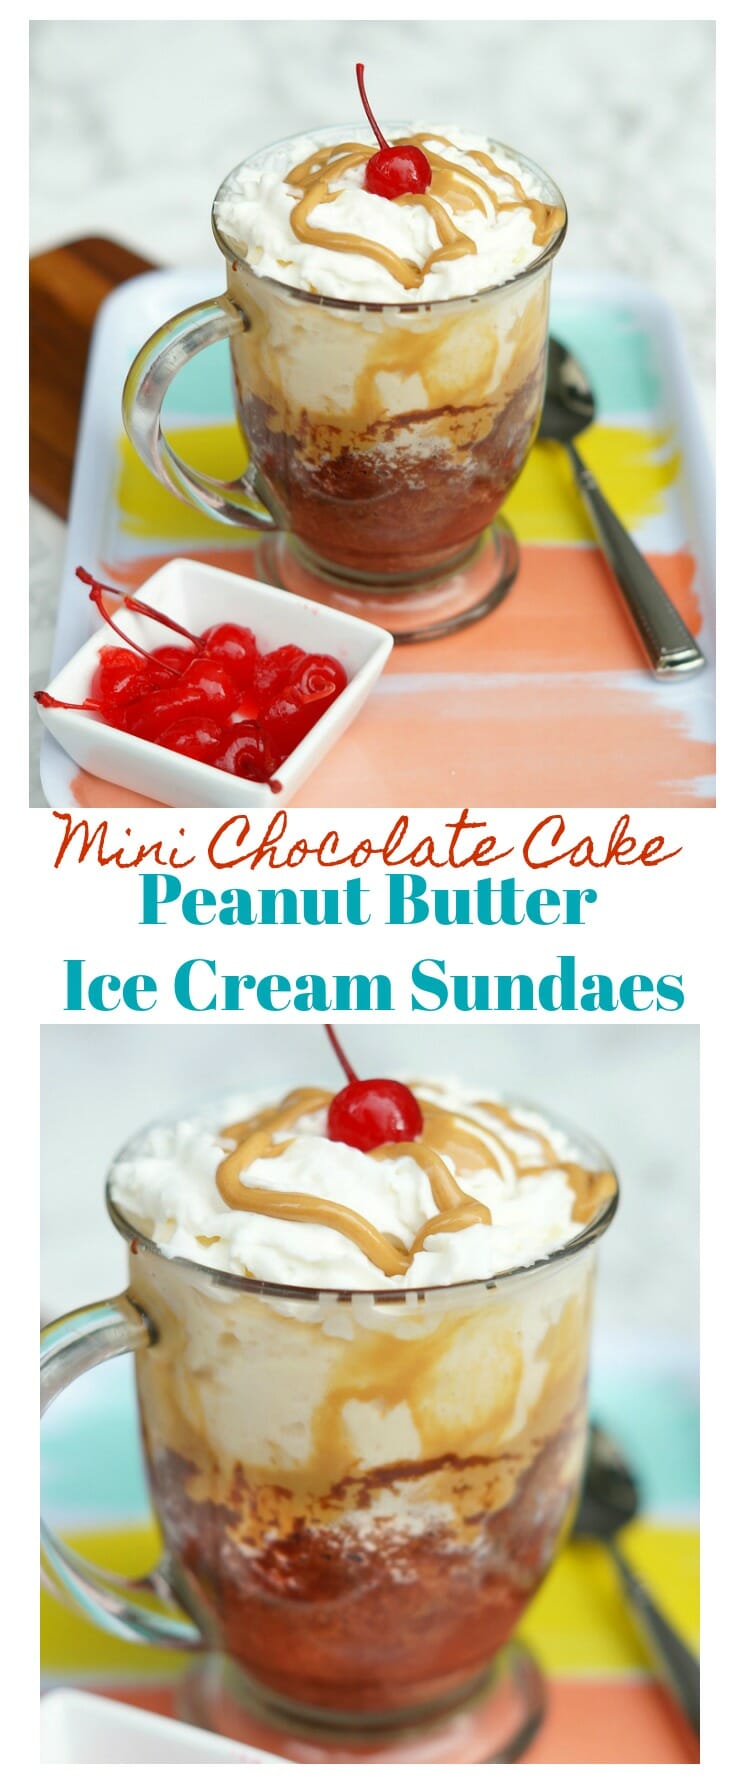 Mini Chocolate Cakes topped with Peanut Butter Ice Cream Sundaes ad #perfectsizeforone 